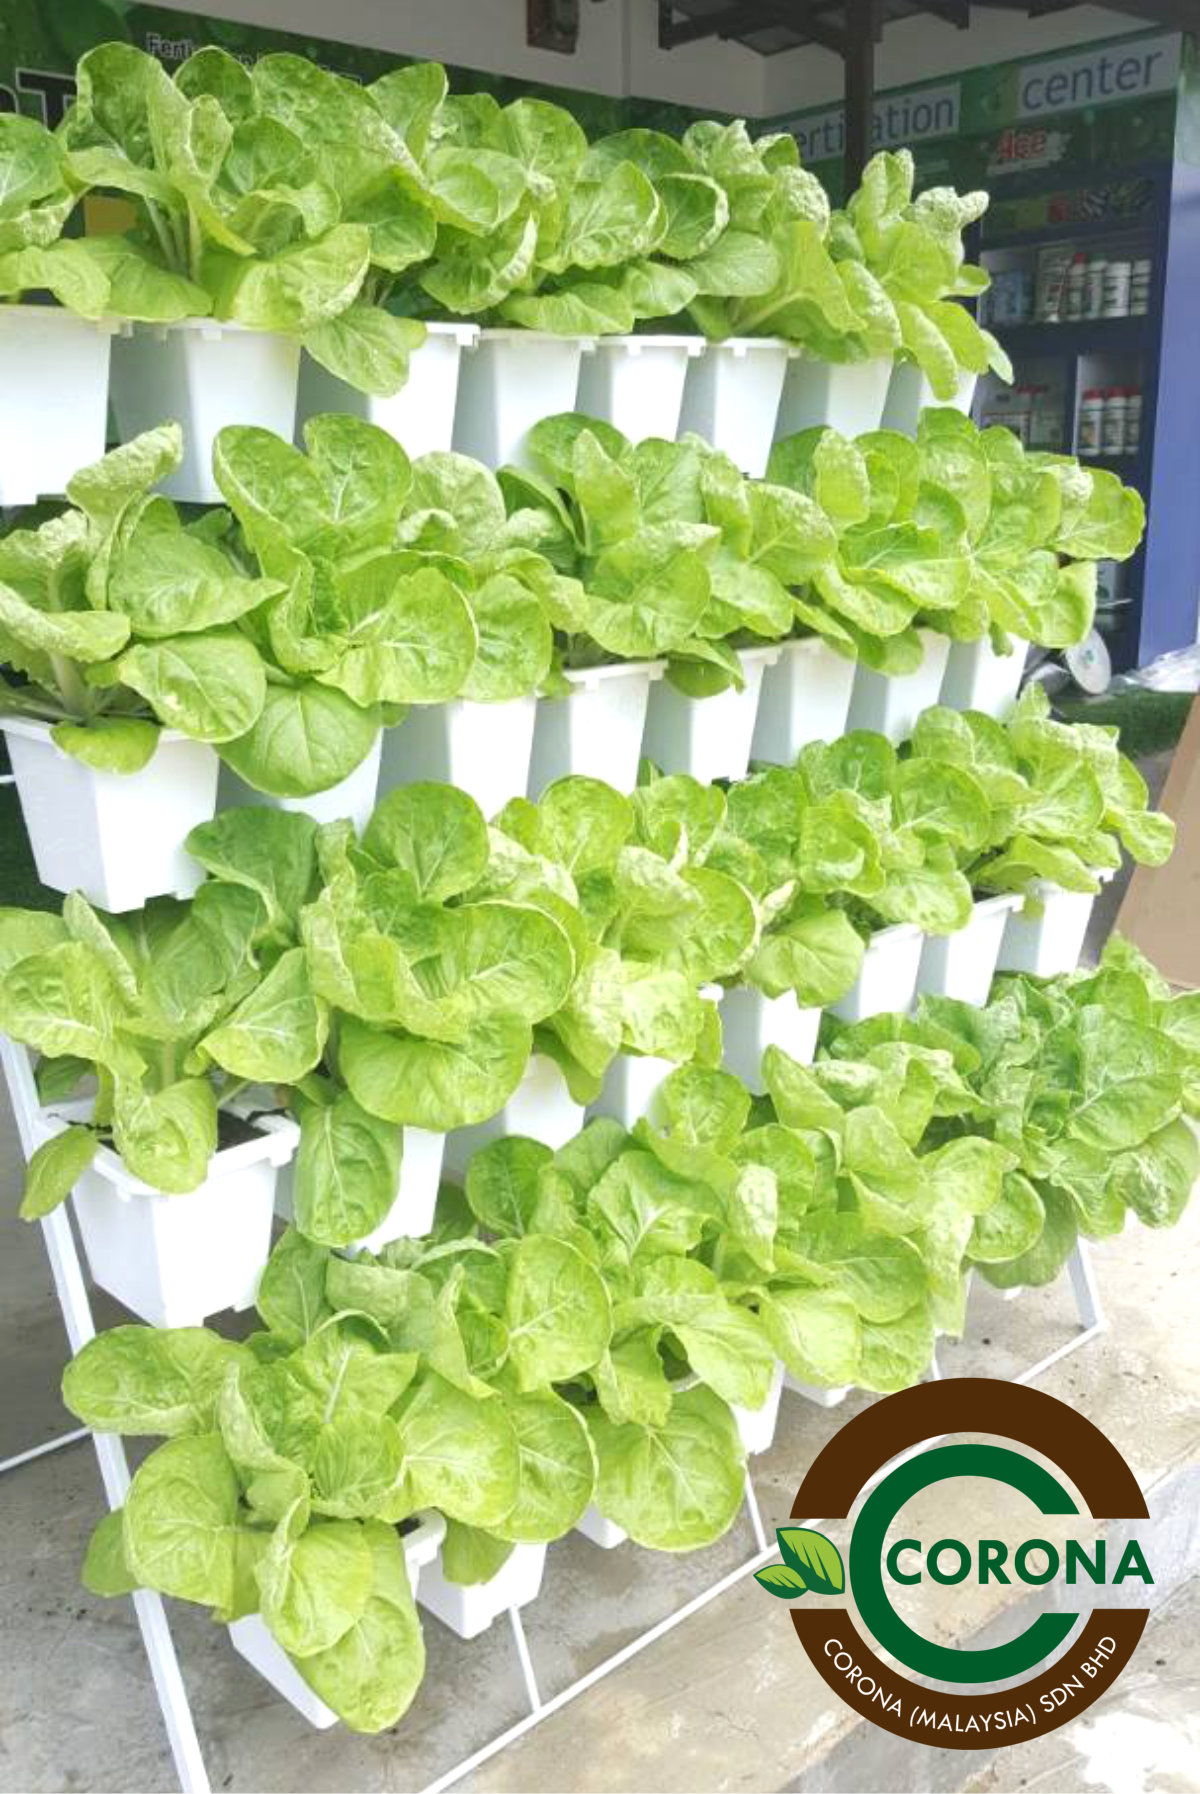 Corona Malaysia Sdn Bhd Grow Your Own Food at Home DIY plantation Organic Vegetables Batu Pahat Johor Malaysia Vertical Growing Stand Alvin Tay Adrian Teh A10